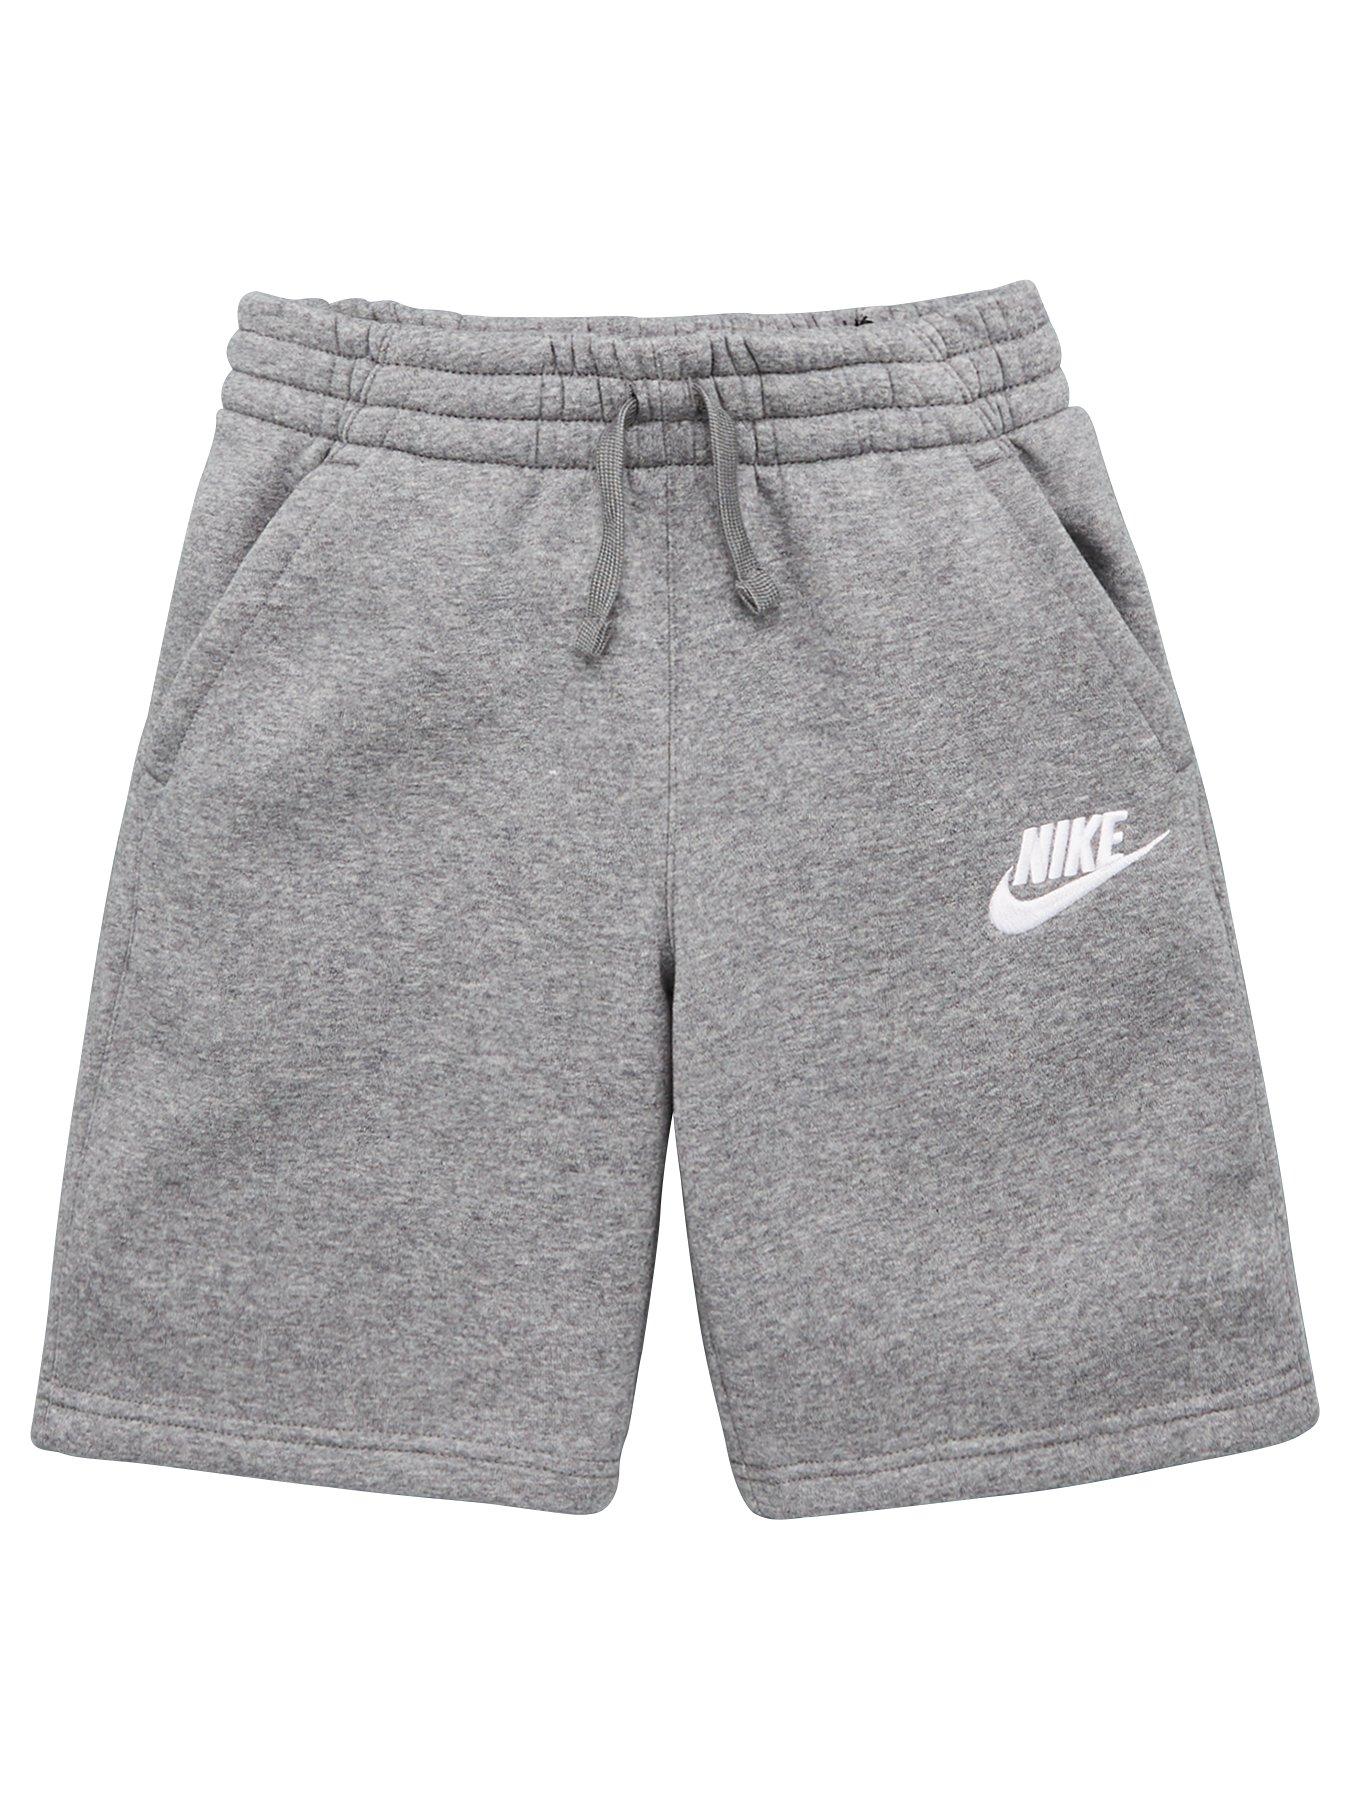 boys grey nike shorts where to buy 